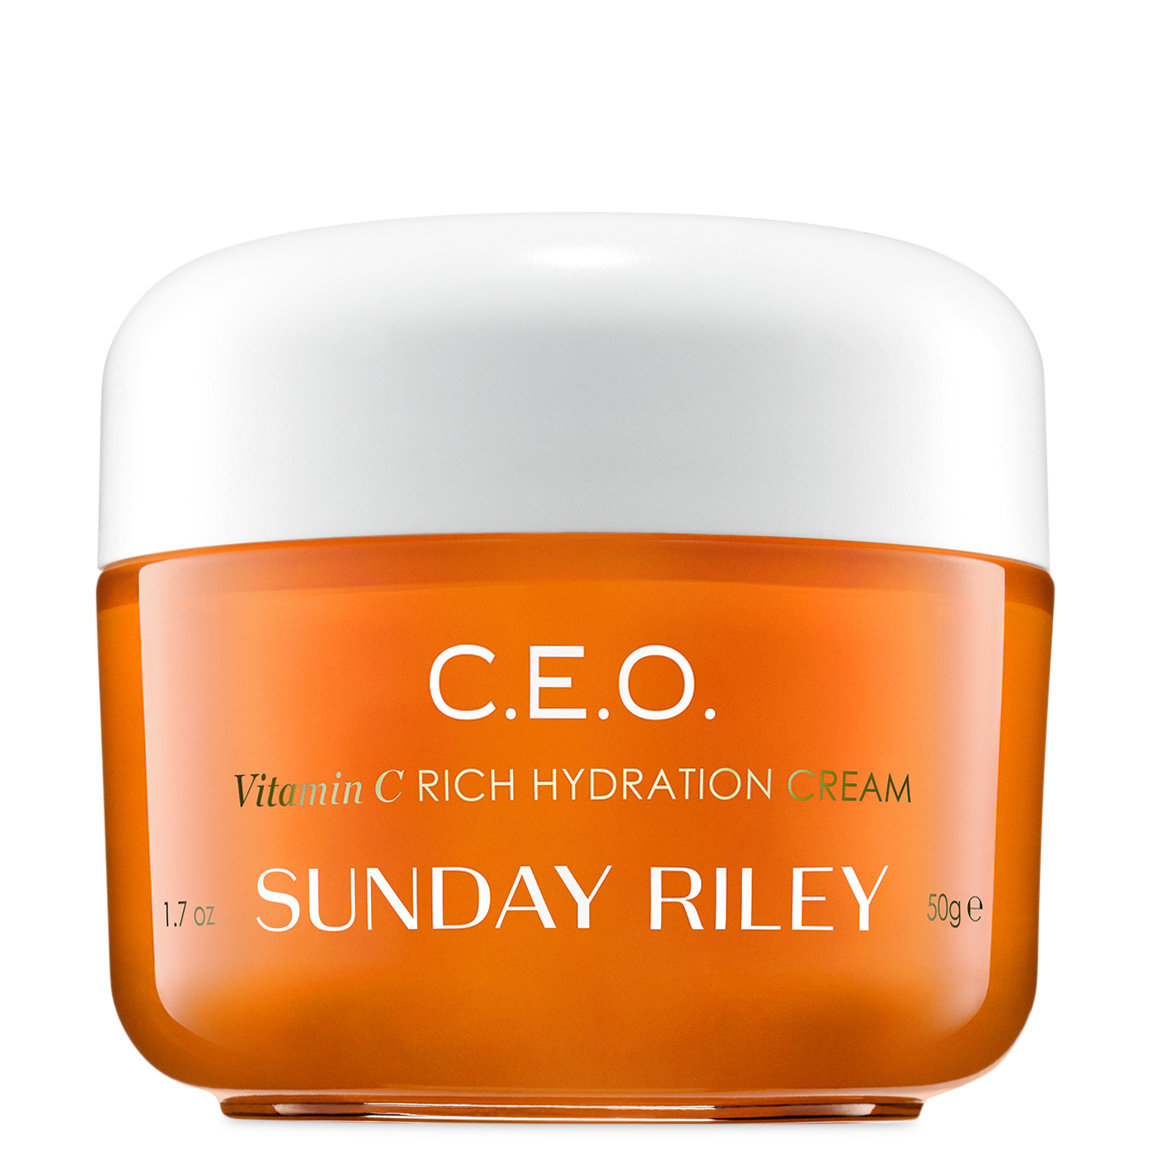 Sunday Riley C.E.O. Vitamin C Rich Hydration Cream 1.7 oz alternative view 1 - product swatch.